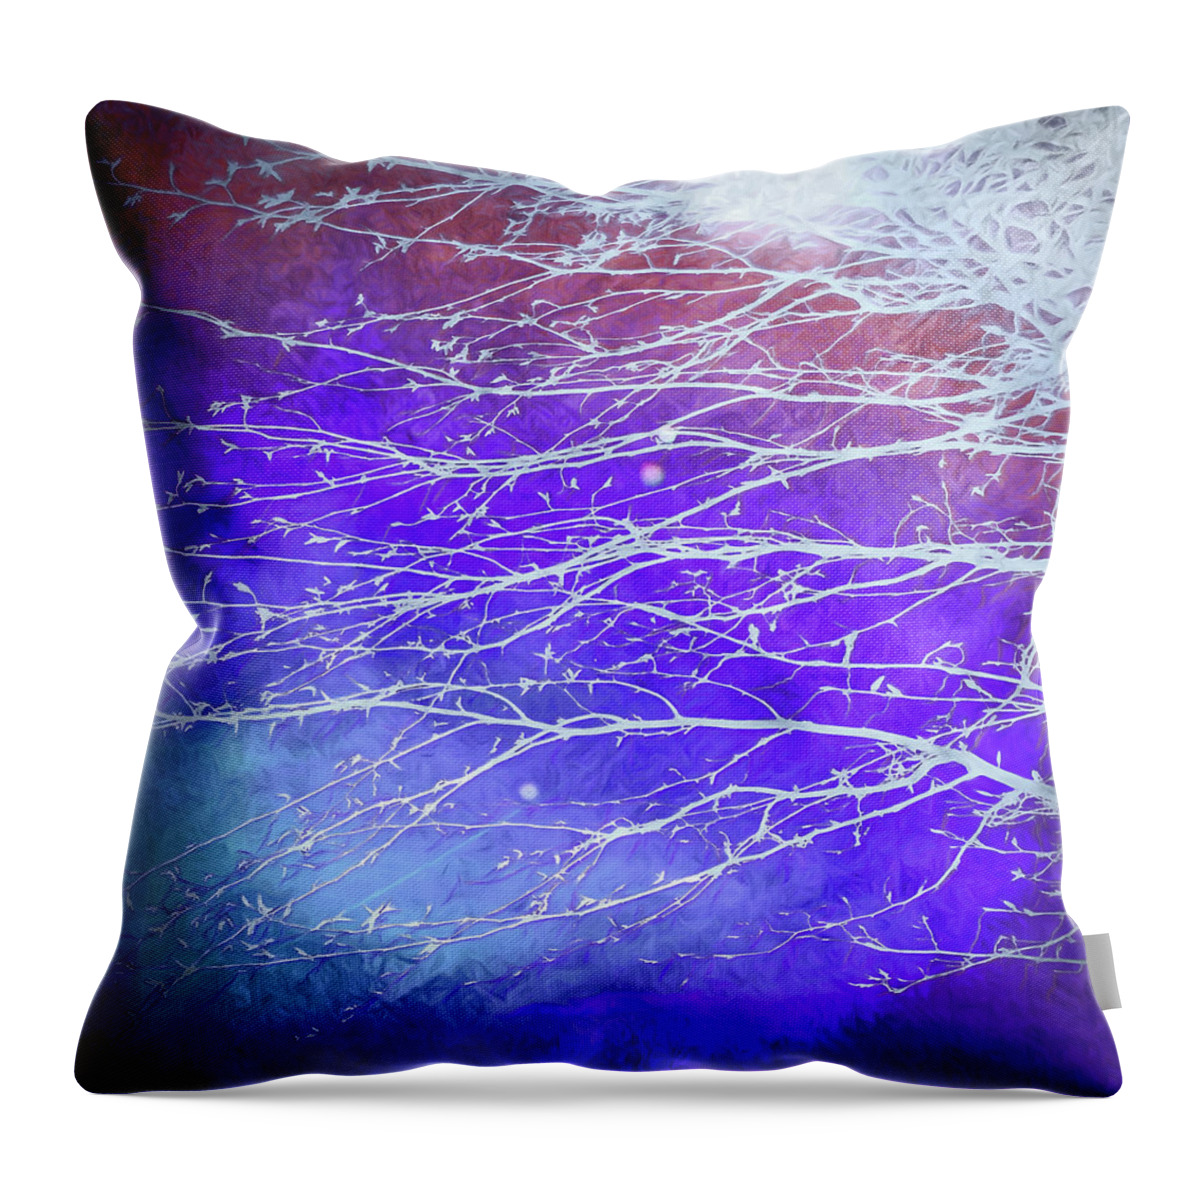 Winter's Twilight Throw Pillow featuring the digital art Winter's Twilight by Susan Maxwell Schmidt